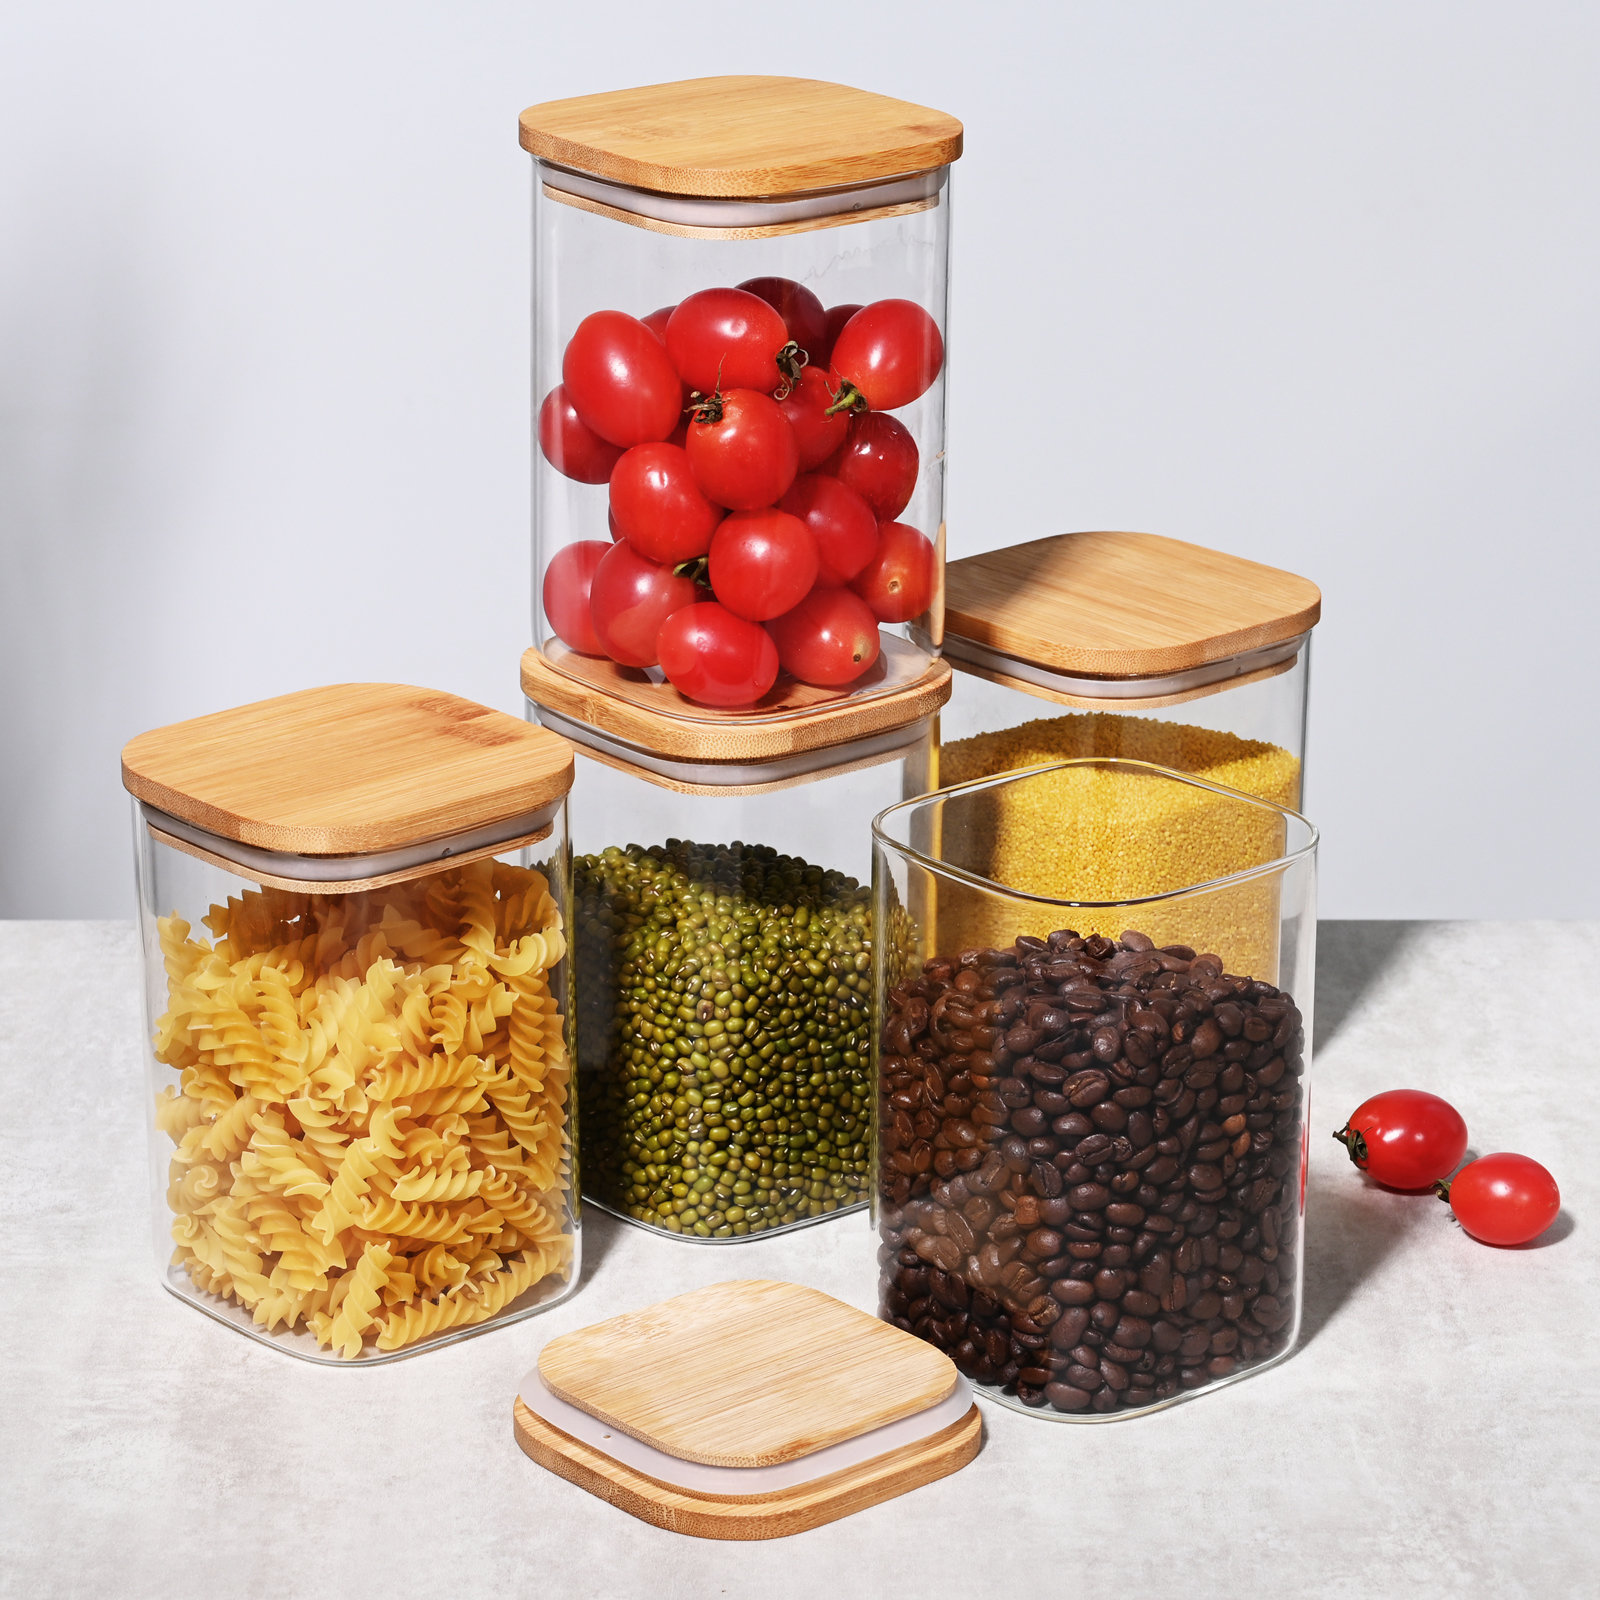 Home Basics Round 55 oz. Borosilicate Glass Food Storage Container